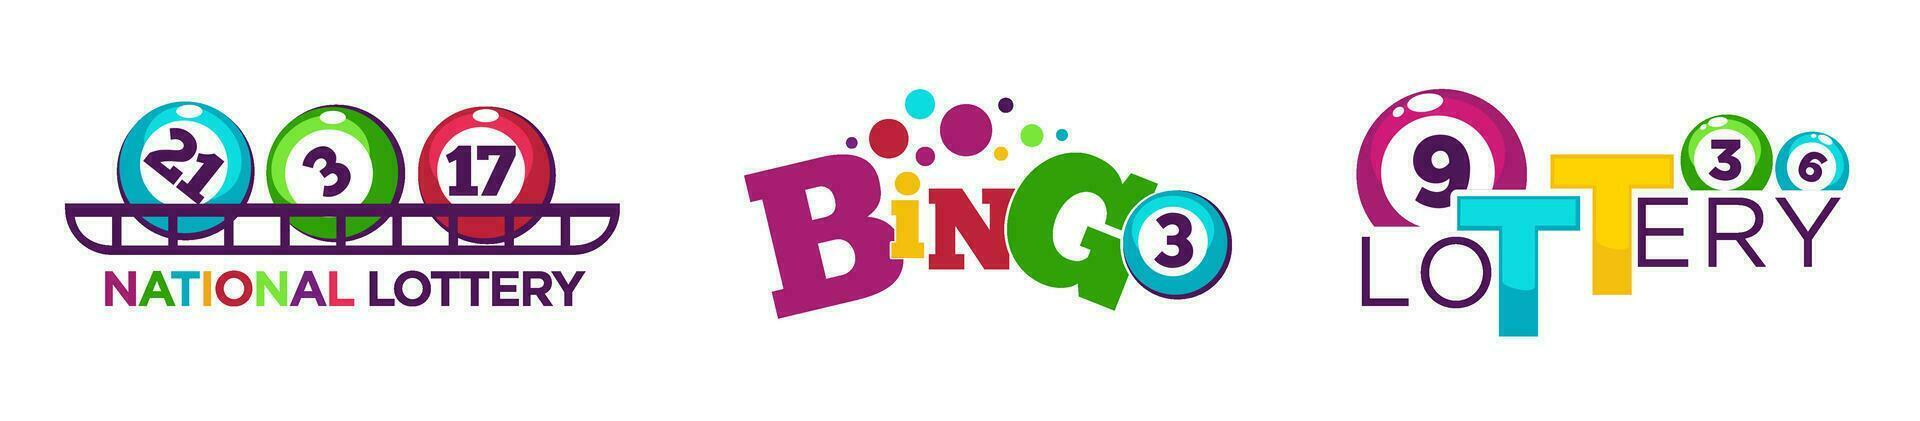 nacional loteria, jogos de azar e Bingo ícones vetor